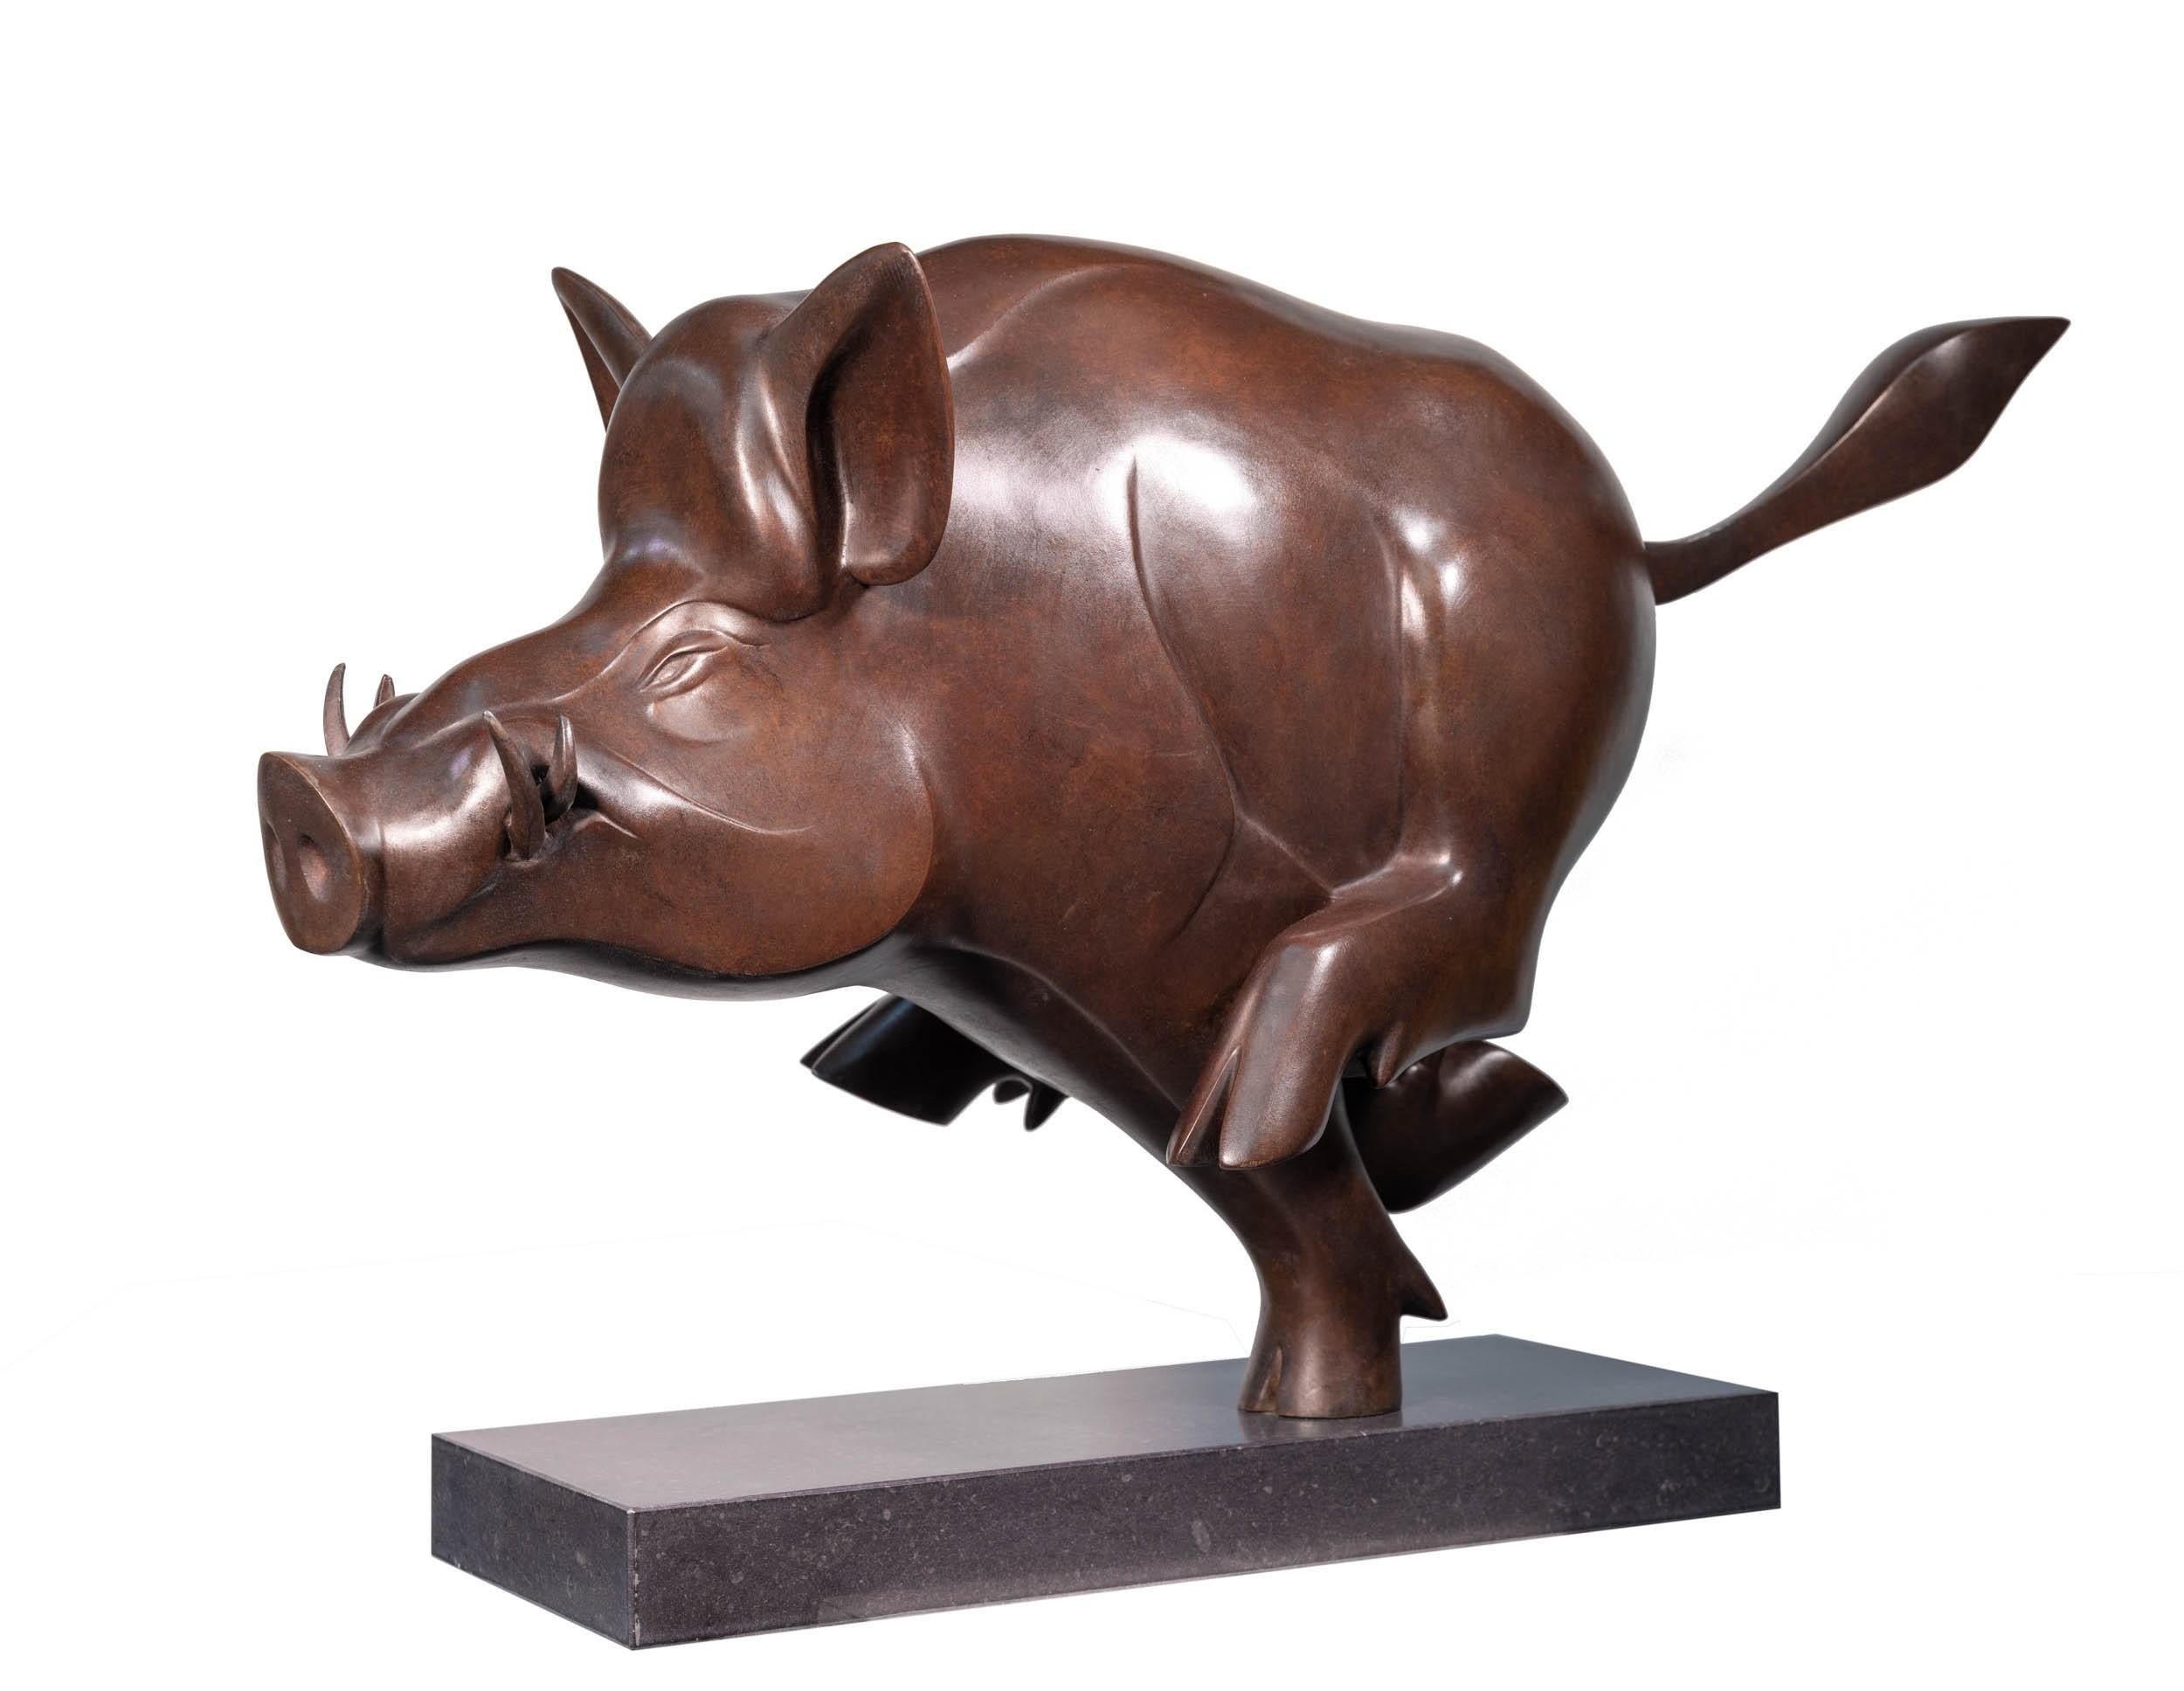 Evert den Hartog Figurative Sculpture – Everzwijn Nr. 2 Wildschwein Big Brown Bronzeskulptur Limitierte Auflage